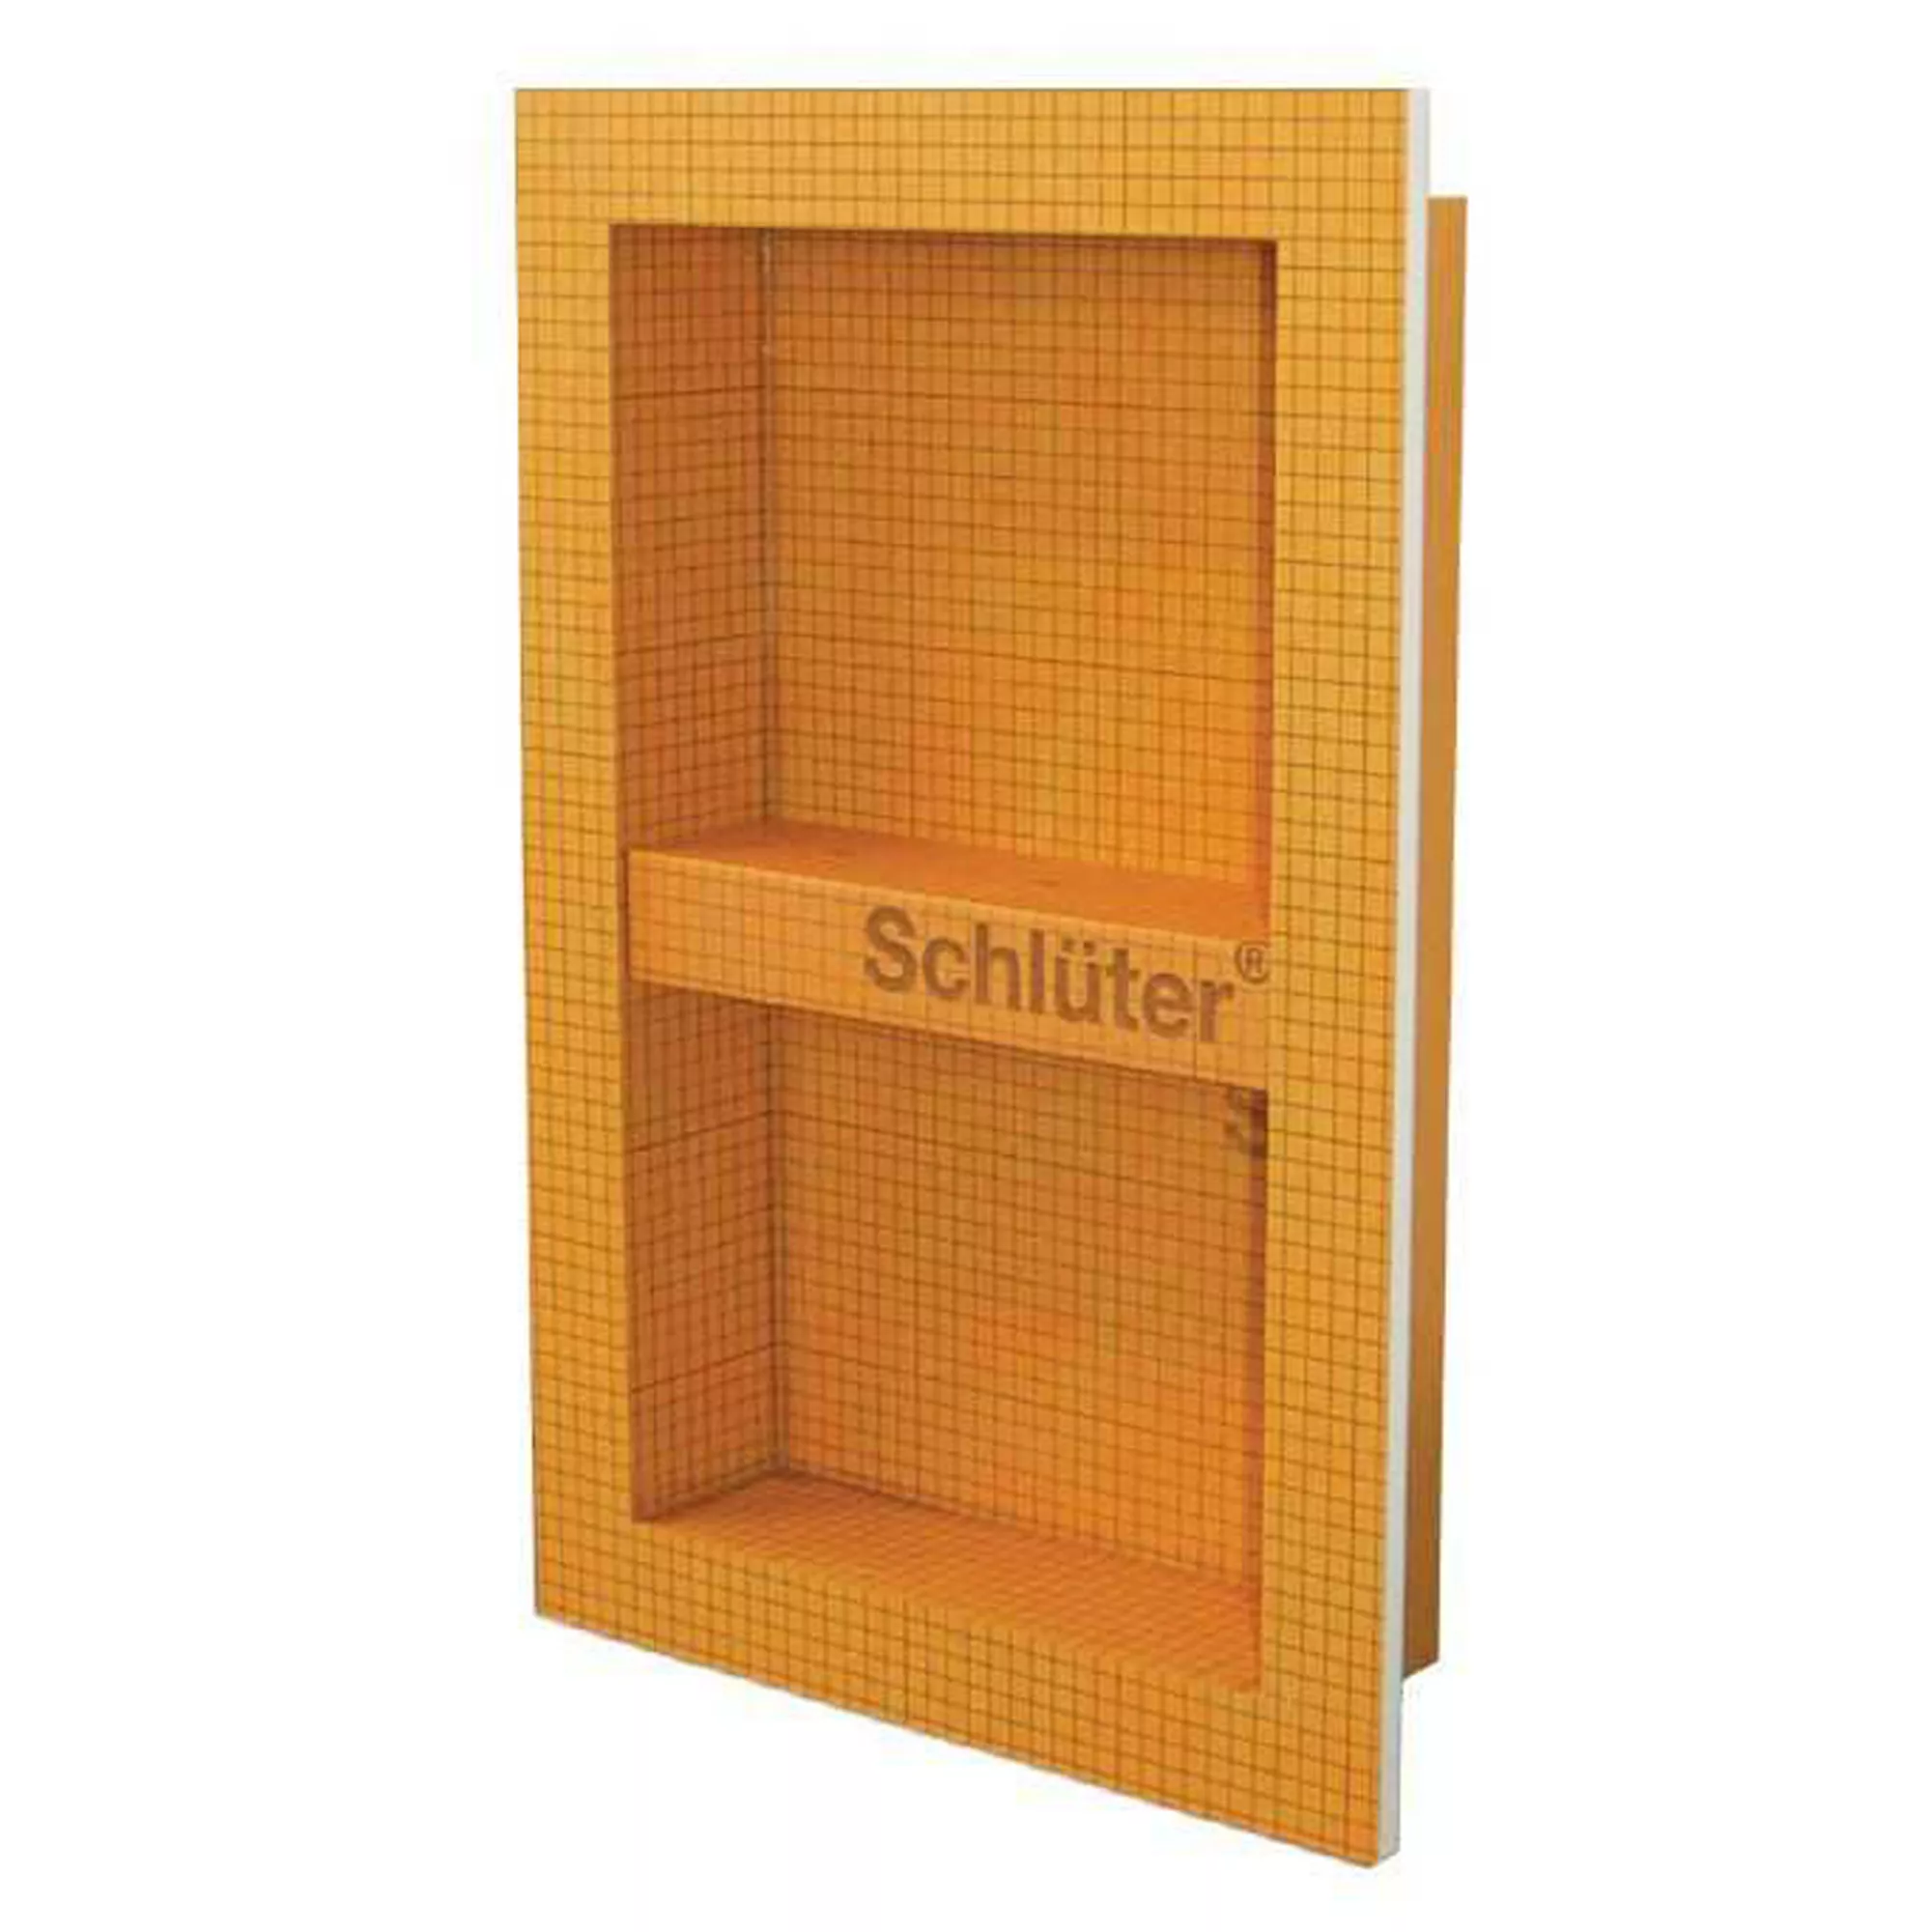 Schlüter Kerdi Board N - Área de arrumação nicho (305x508x89mm)